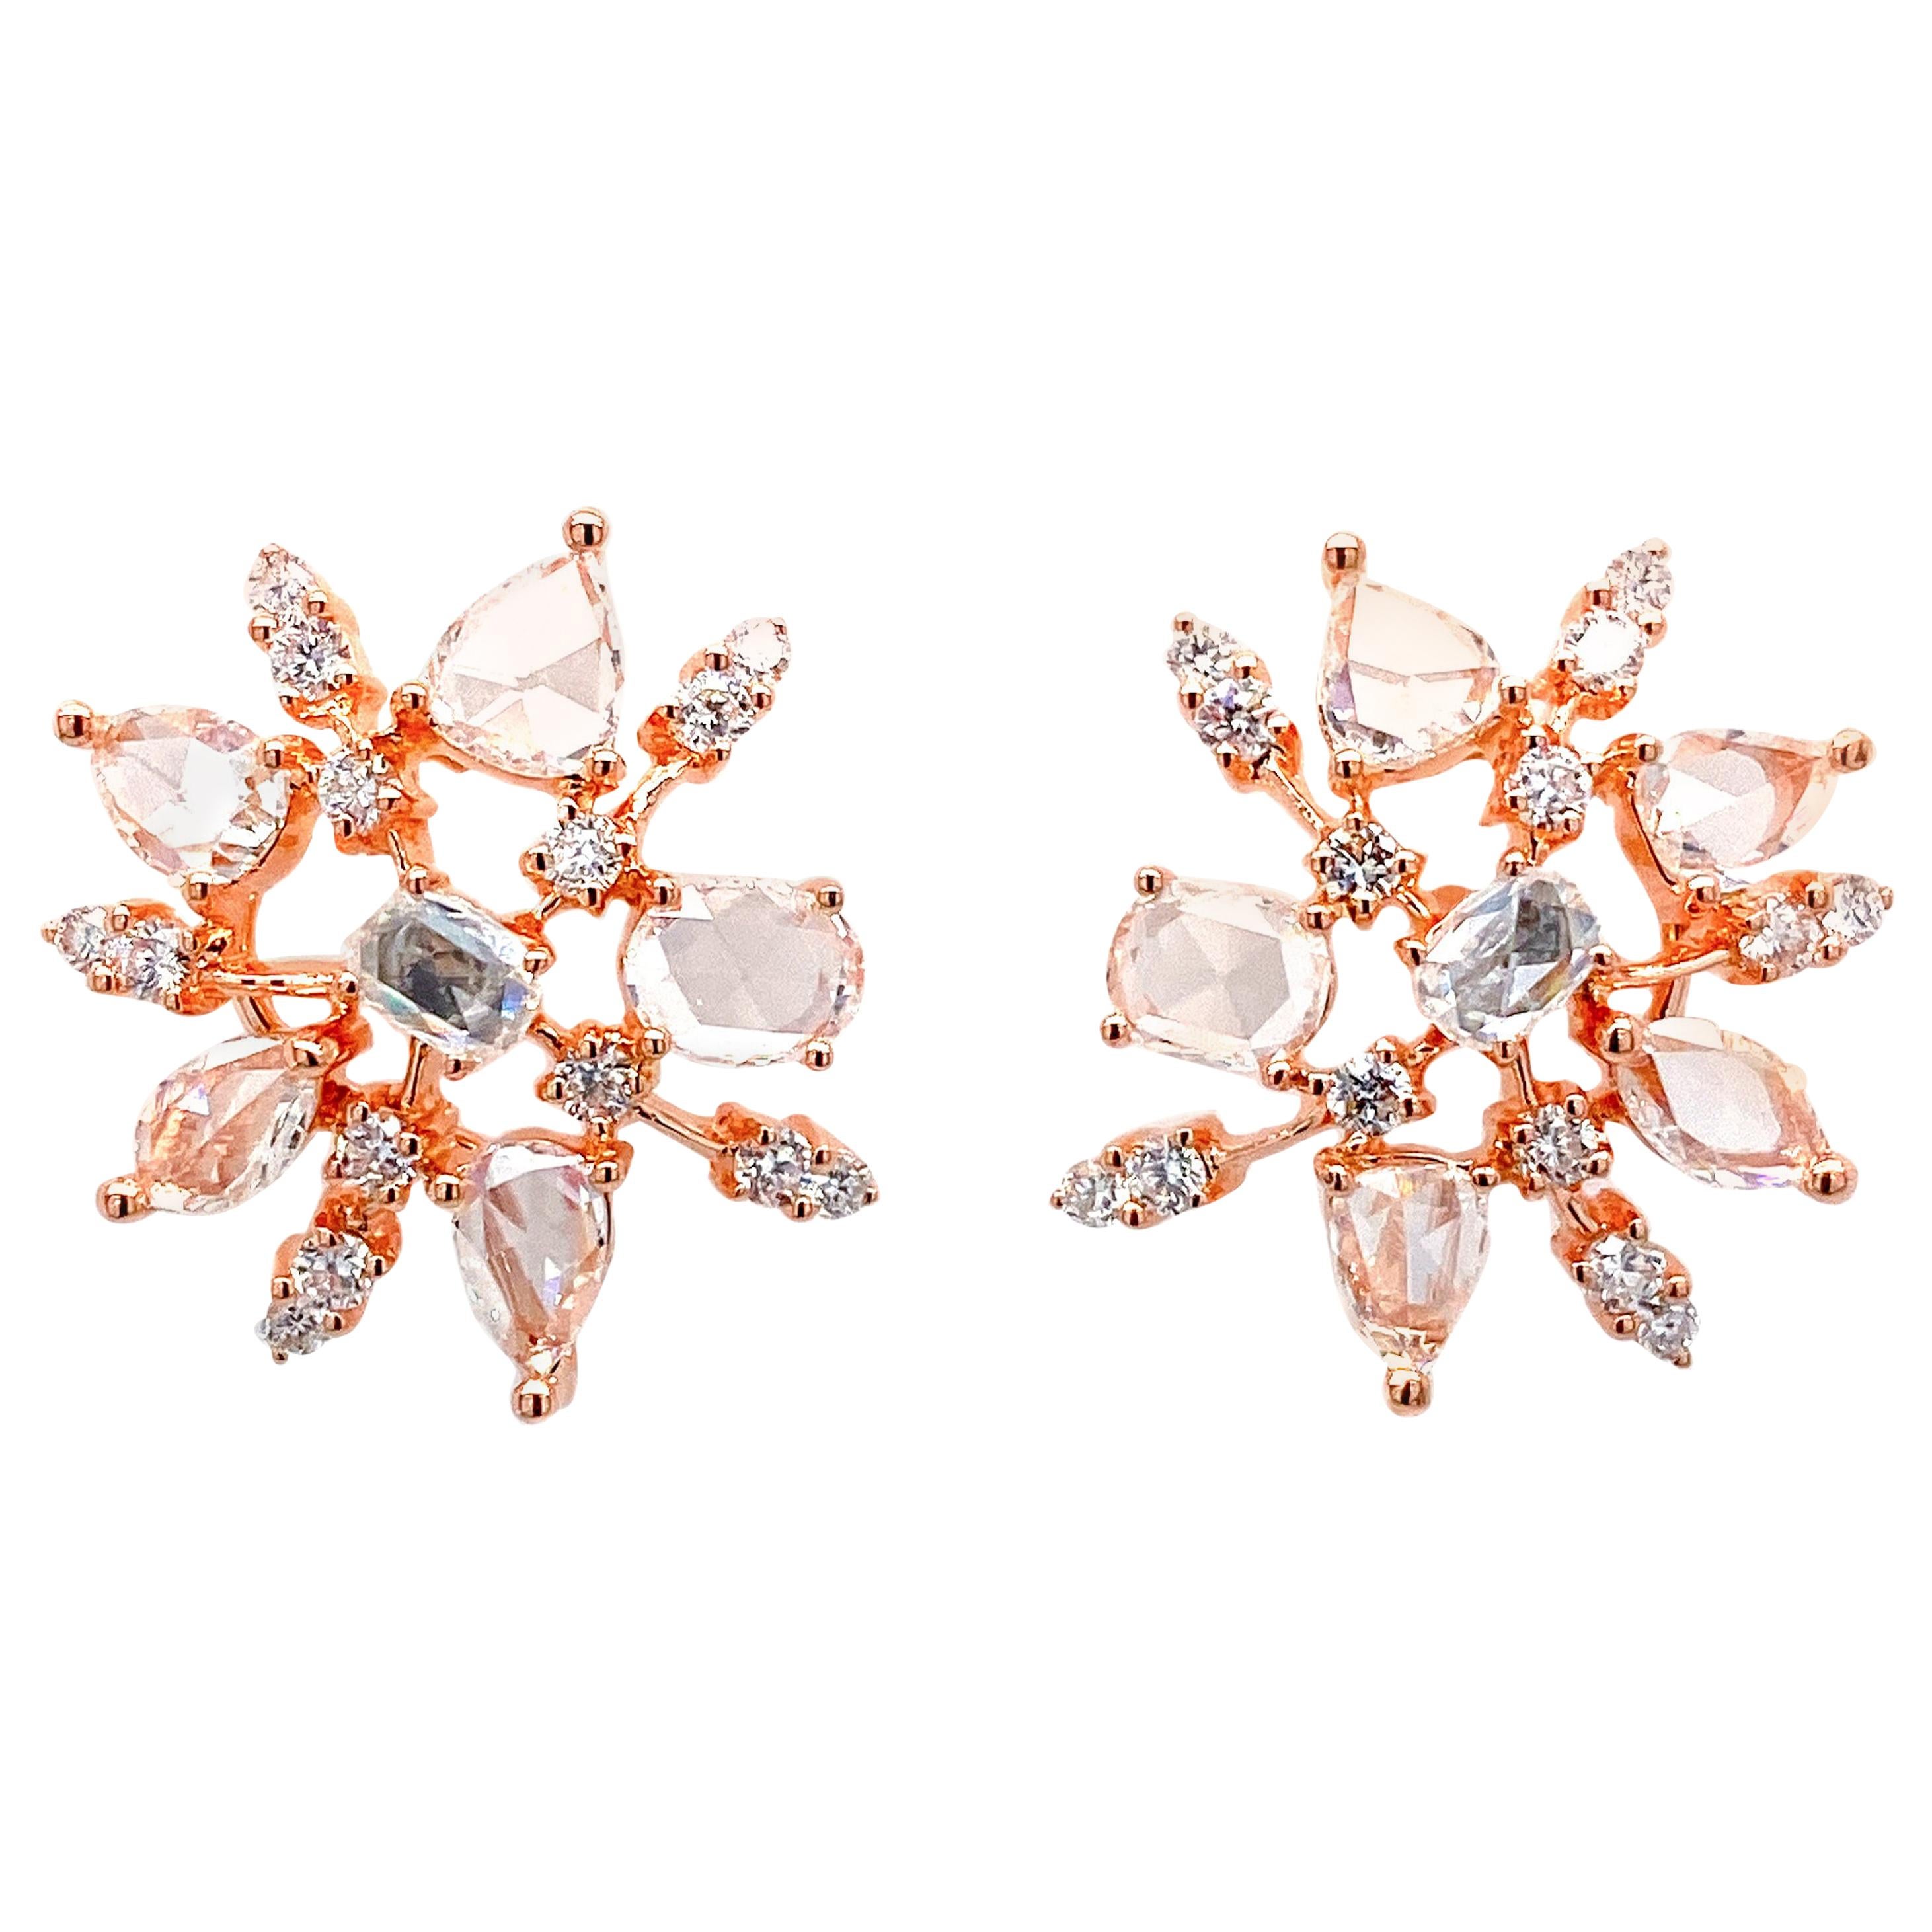 Spark Motif White Diamond Earrings by Dilys’ in 18 Karat Rose Gold